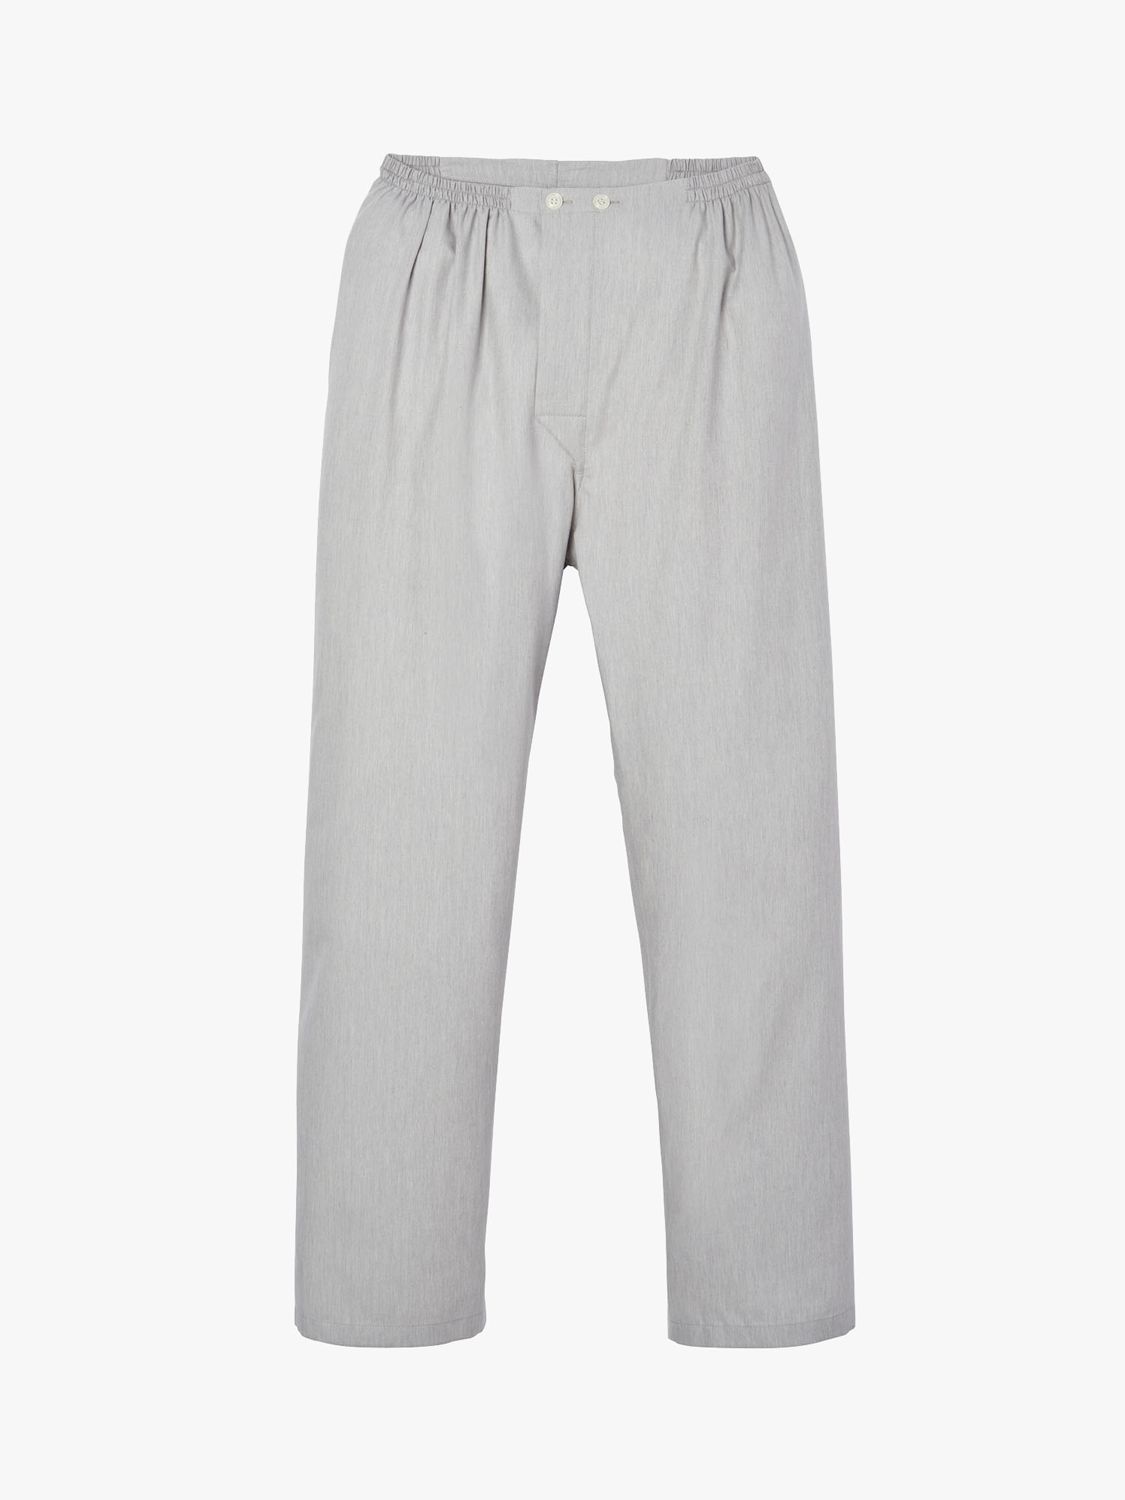 British Boxers Herringbone Cotton Twill Pyjama Set, Armoury Grey, S